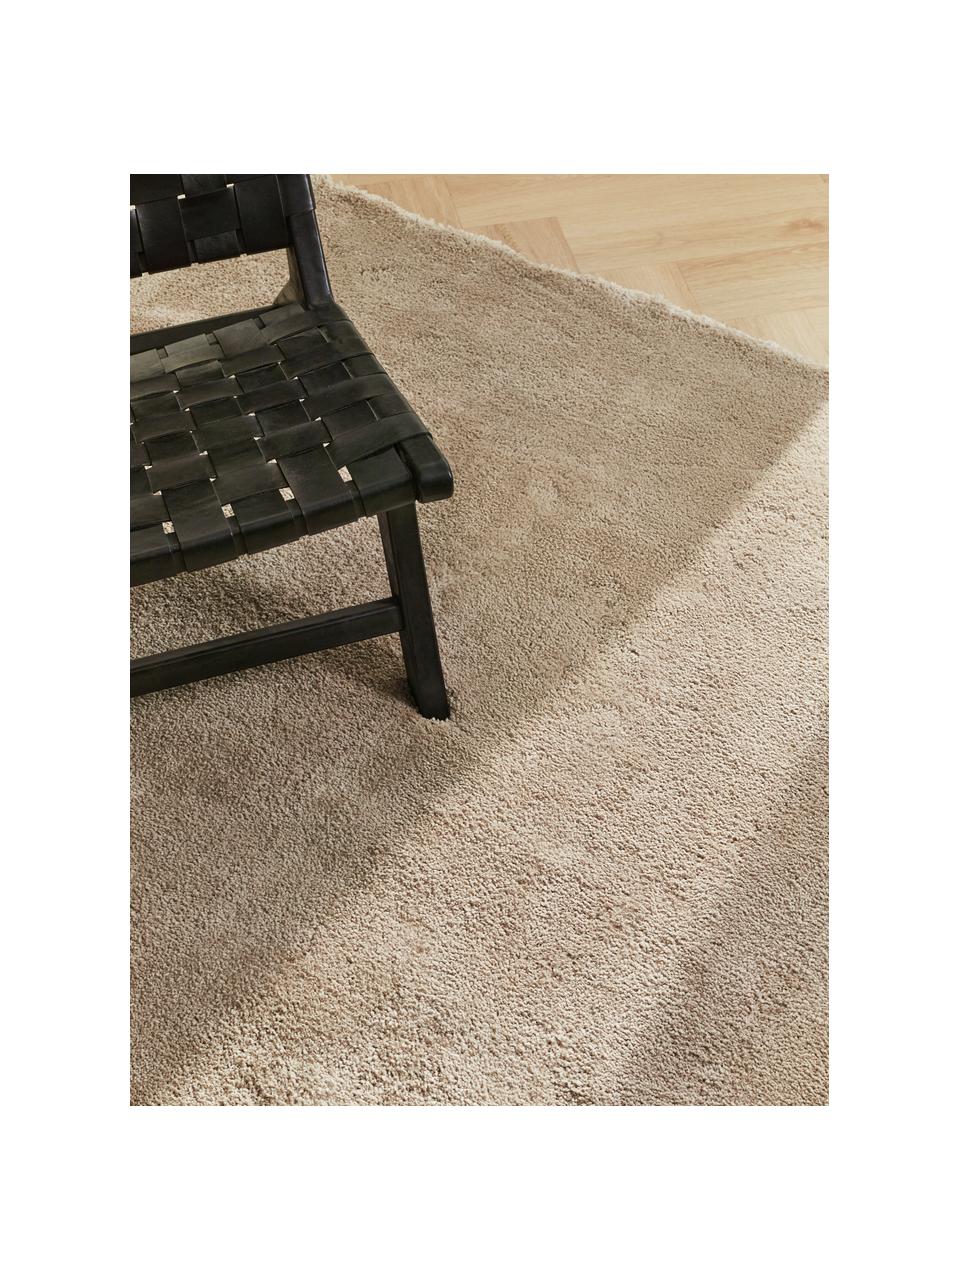 Načechraný koberec s vysokým vlasem Leighton, Béžovo-hnědá, Š 80 cm, D 150 cm (velikost XS)